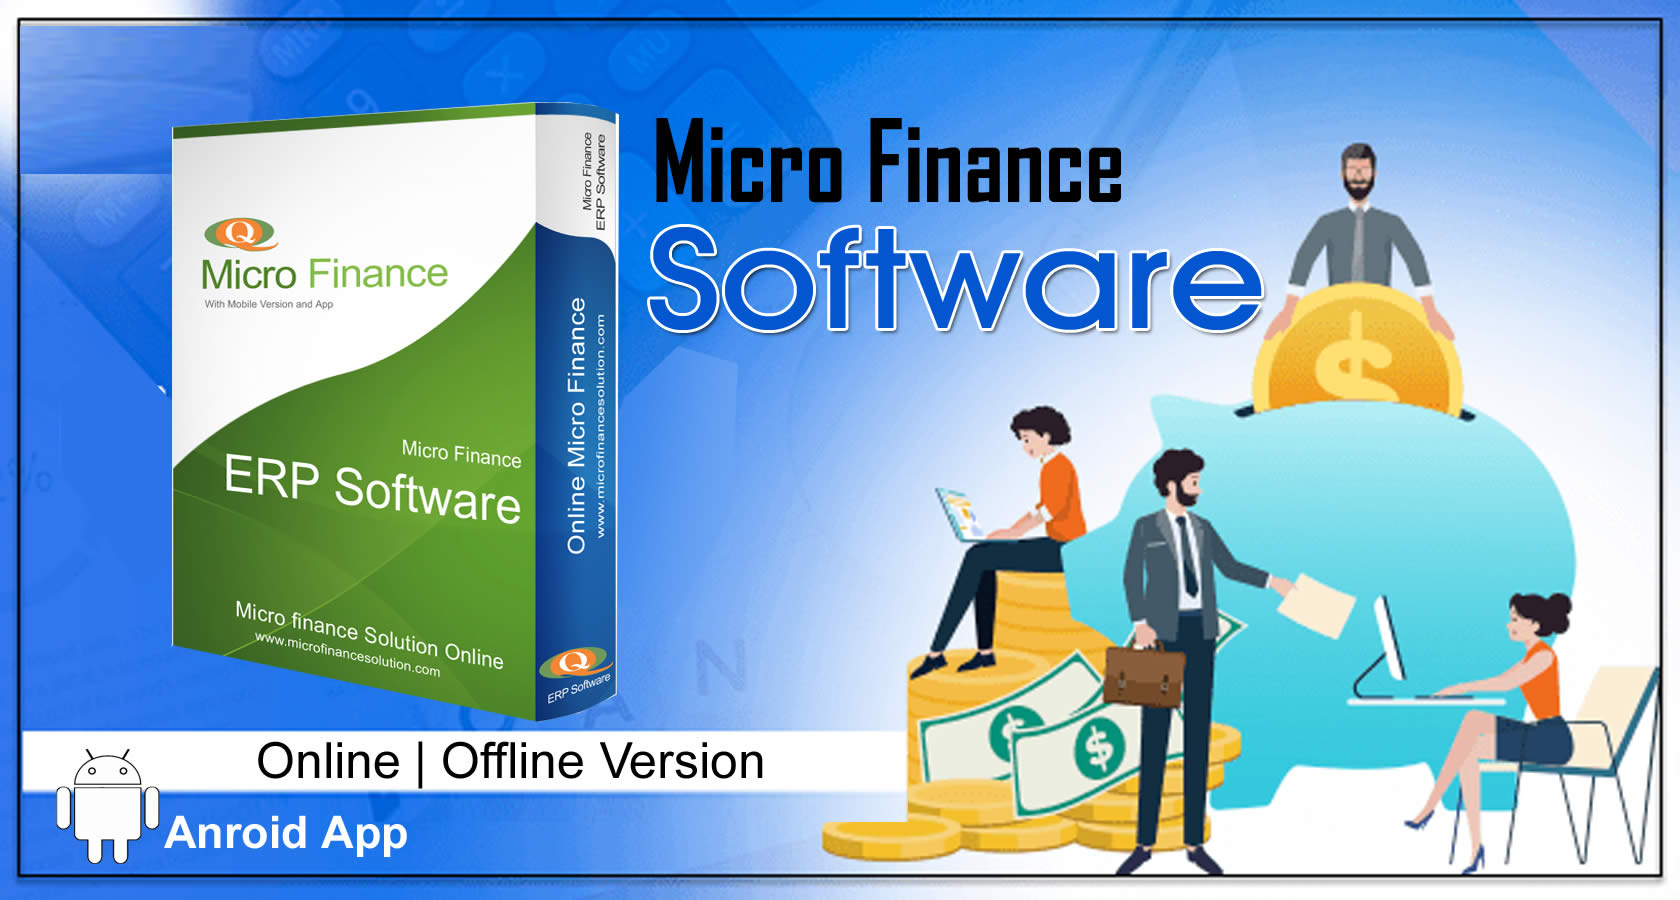 Micro Finance Image